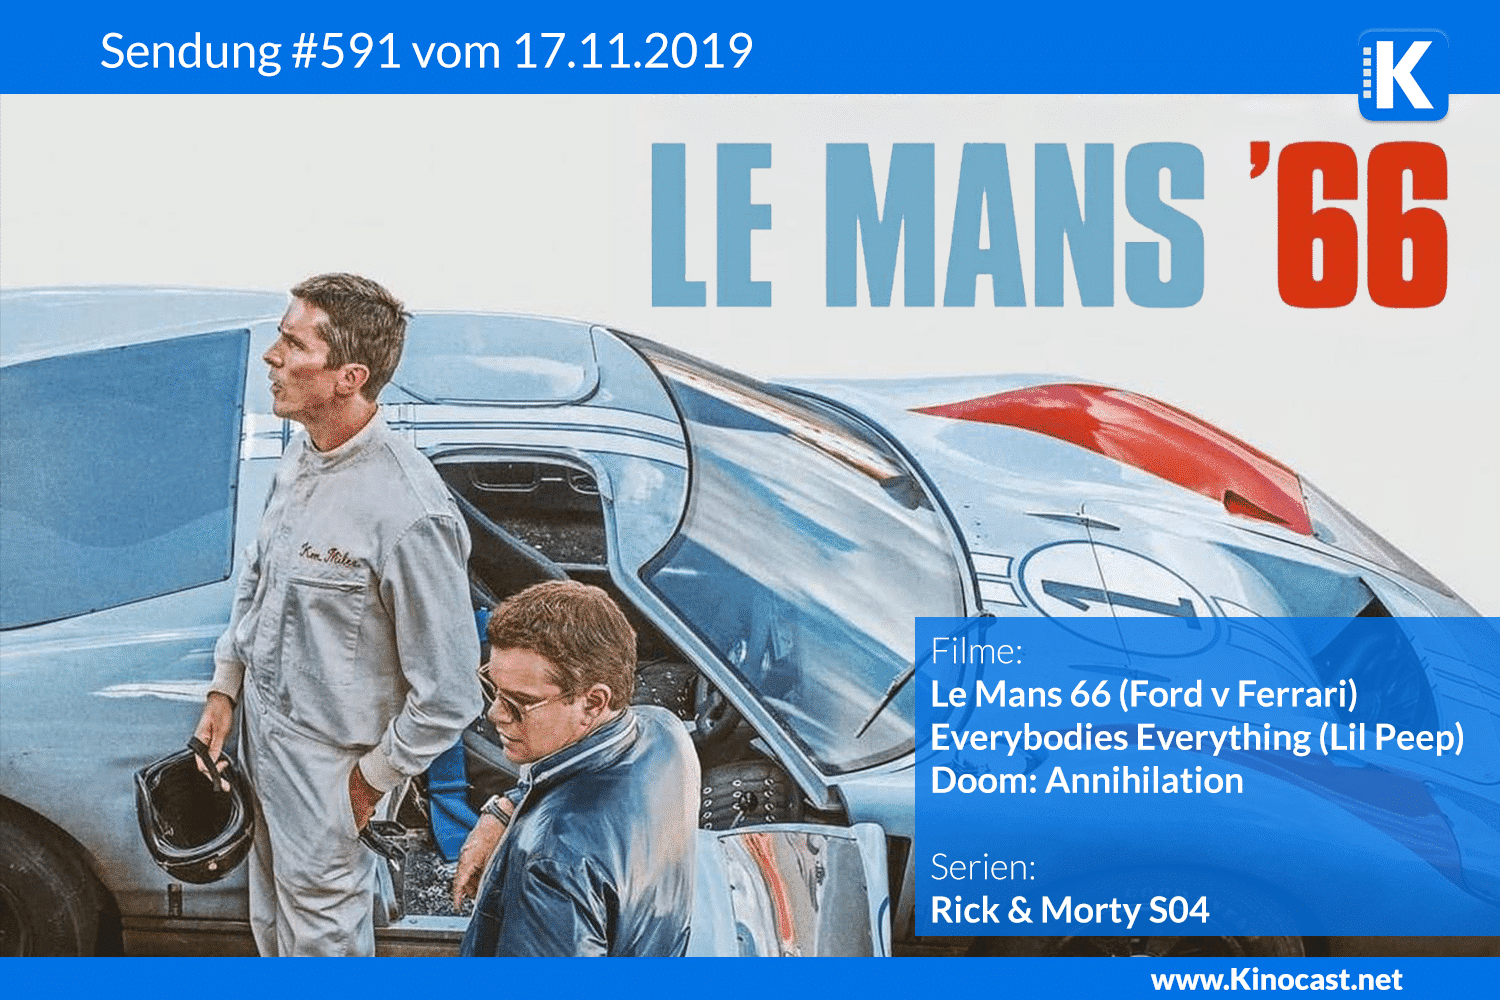 Le Mans Everybodies Everything Lil Peep Doom Rick Morty s Mandalorian Download film german deutsch